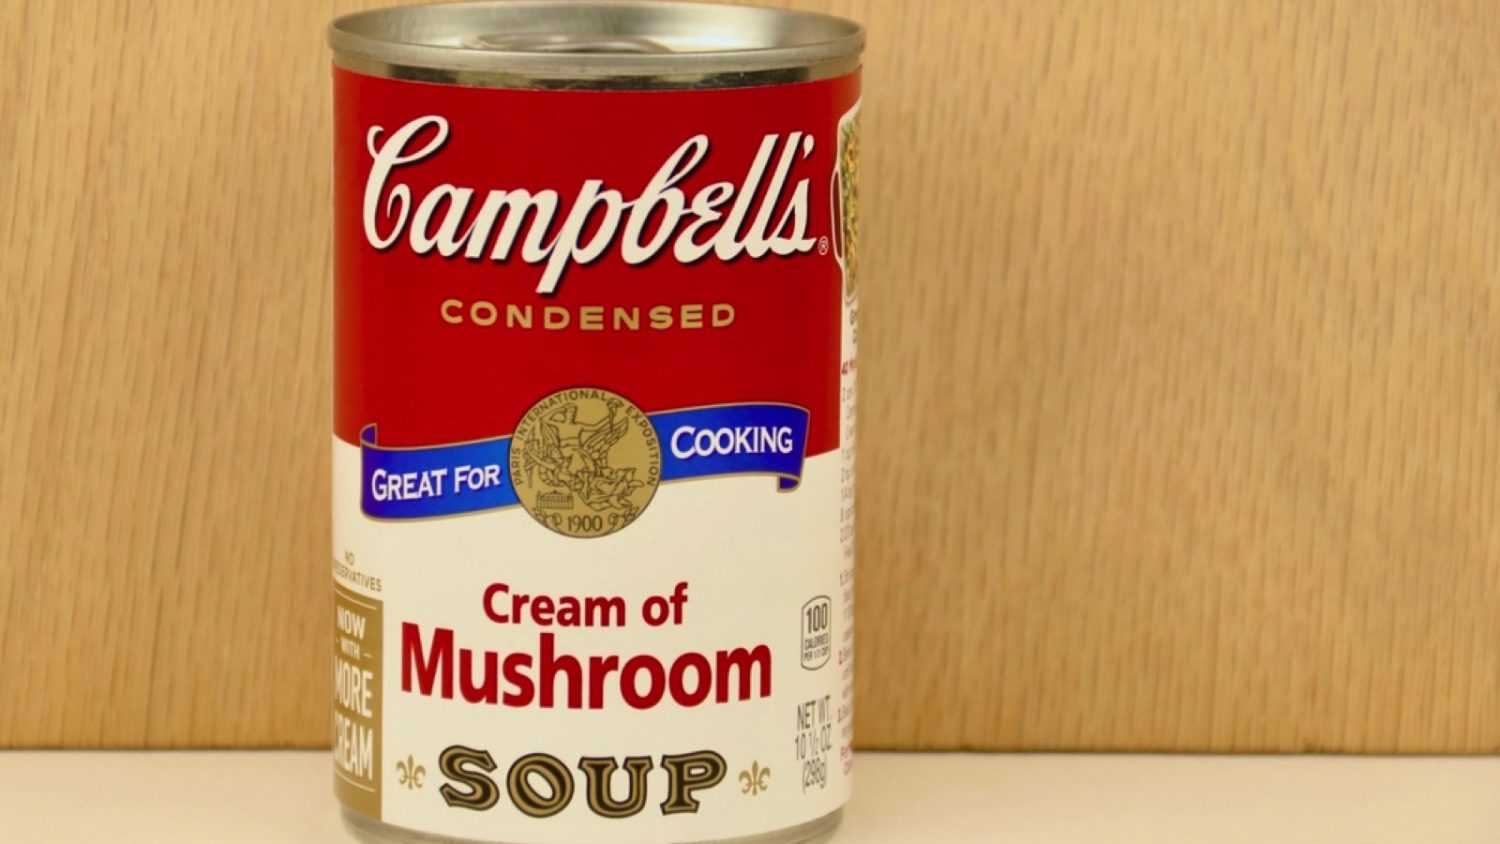 Campbells Cream of Mushroom Soup